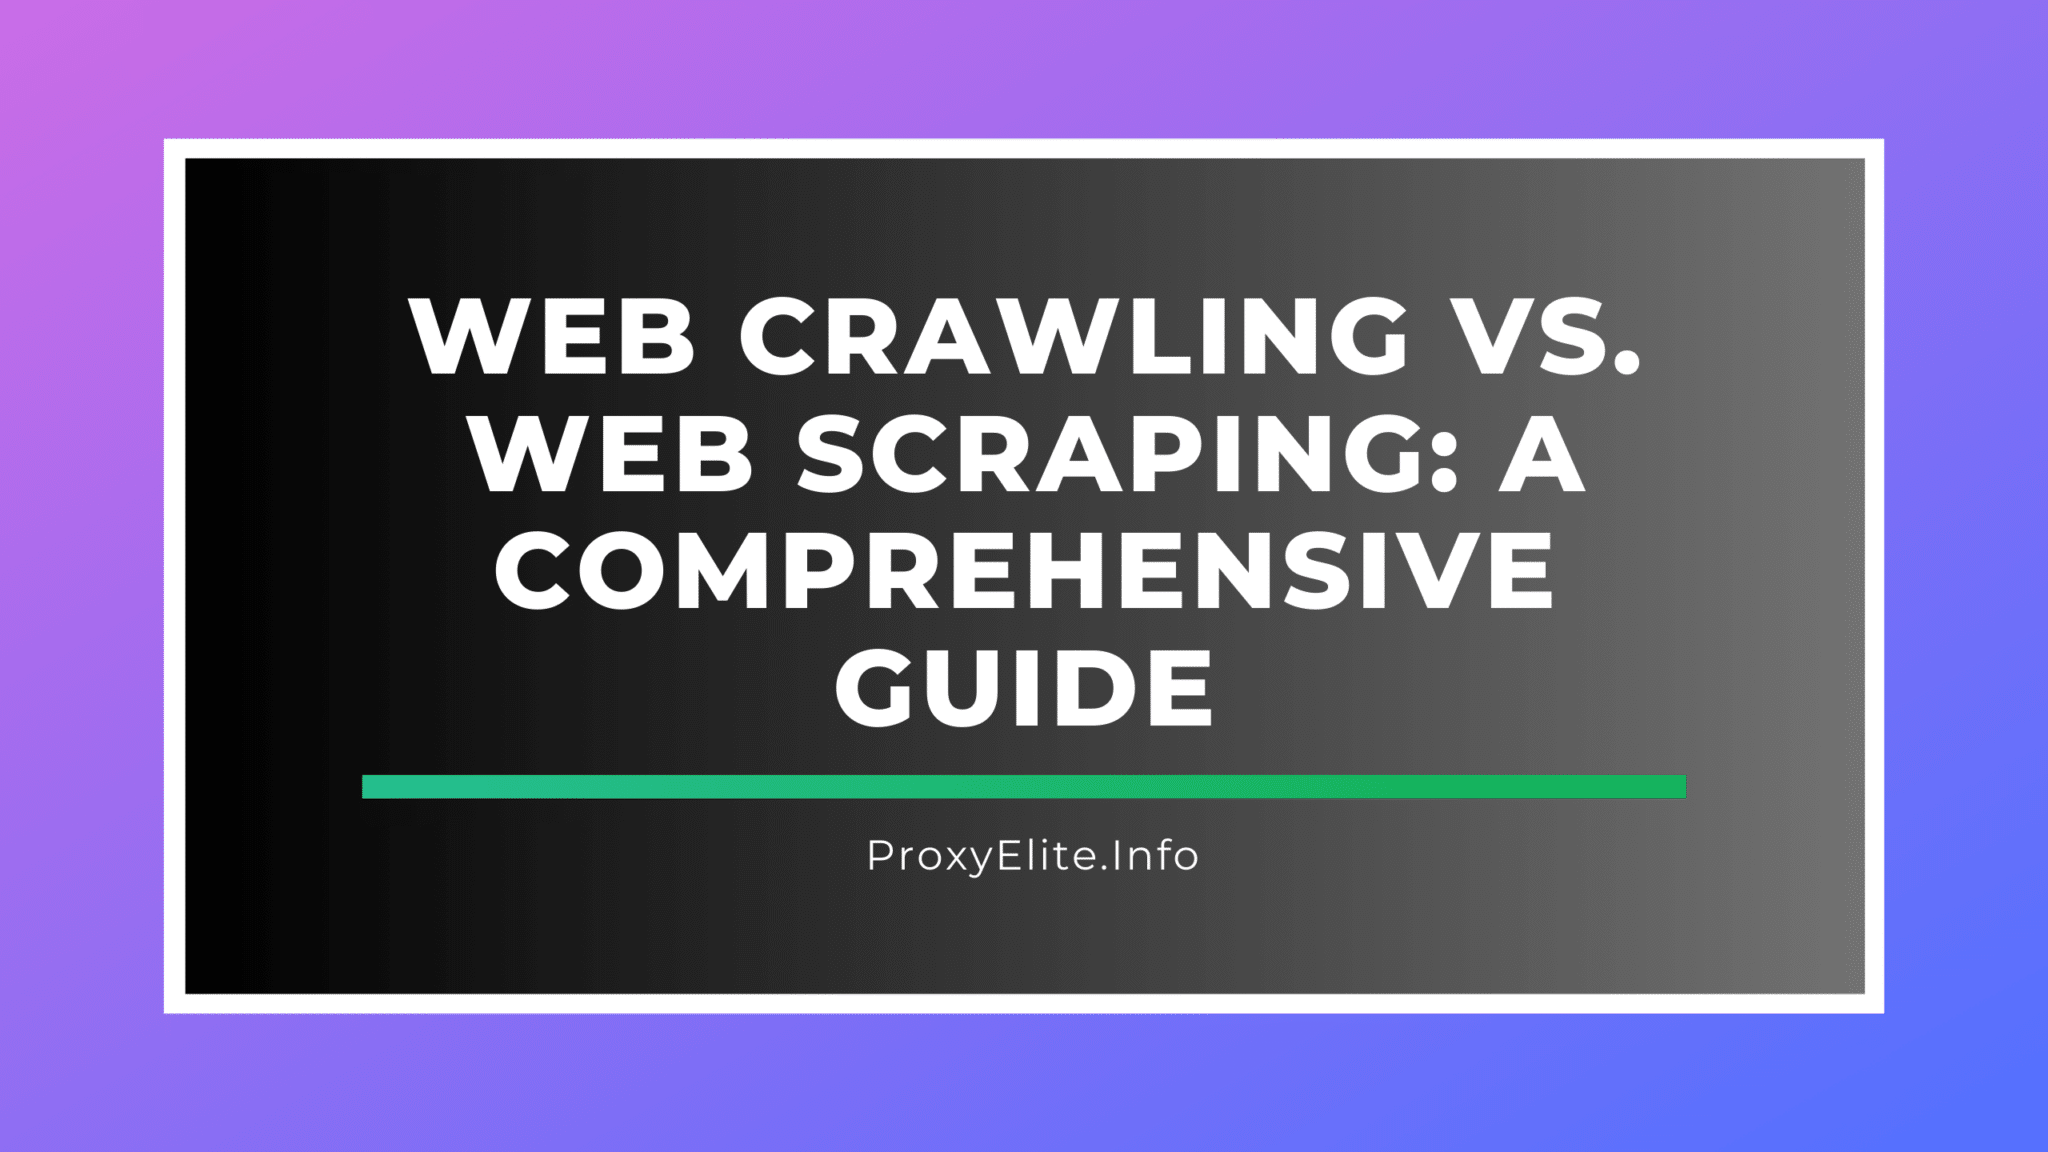 Web Crawling vs. Web Scraping: A Comprehensive Guide